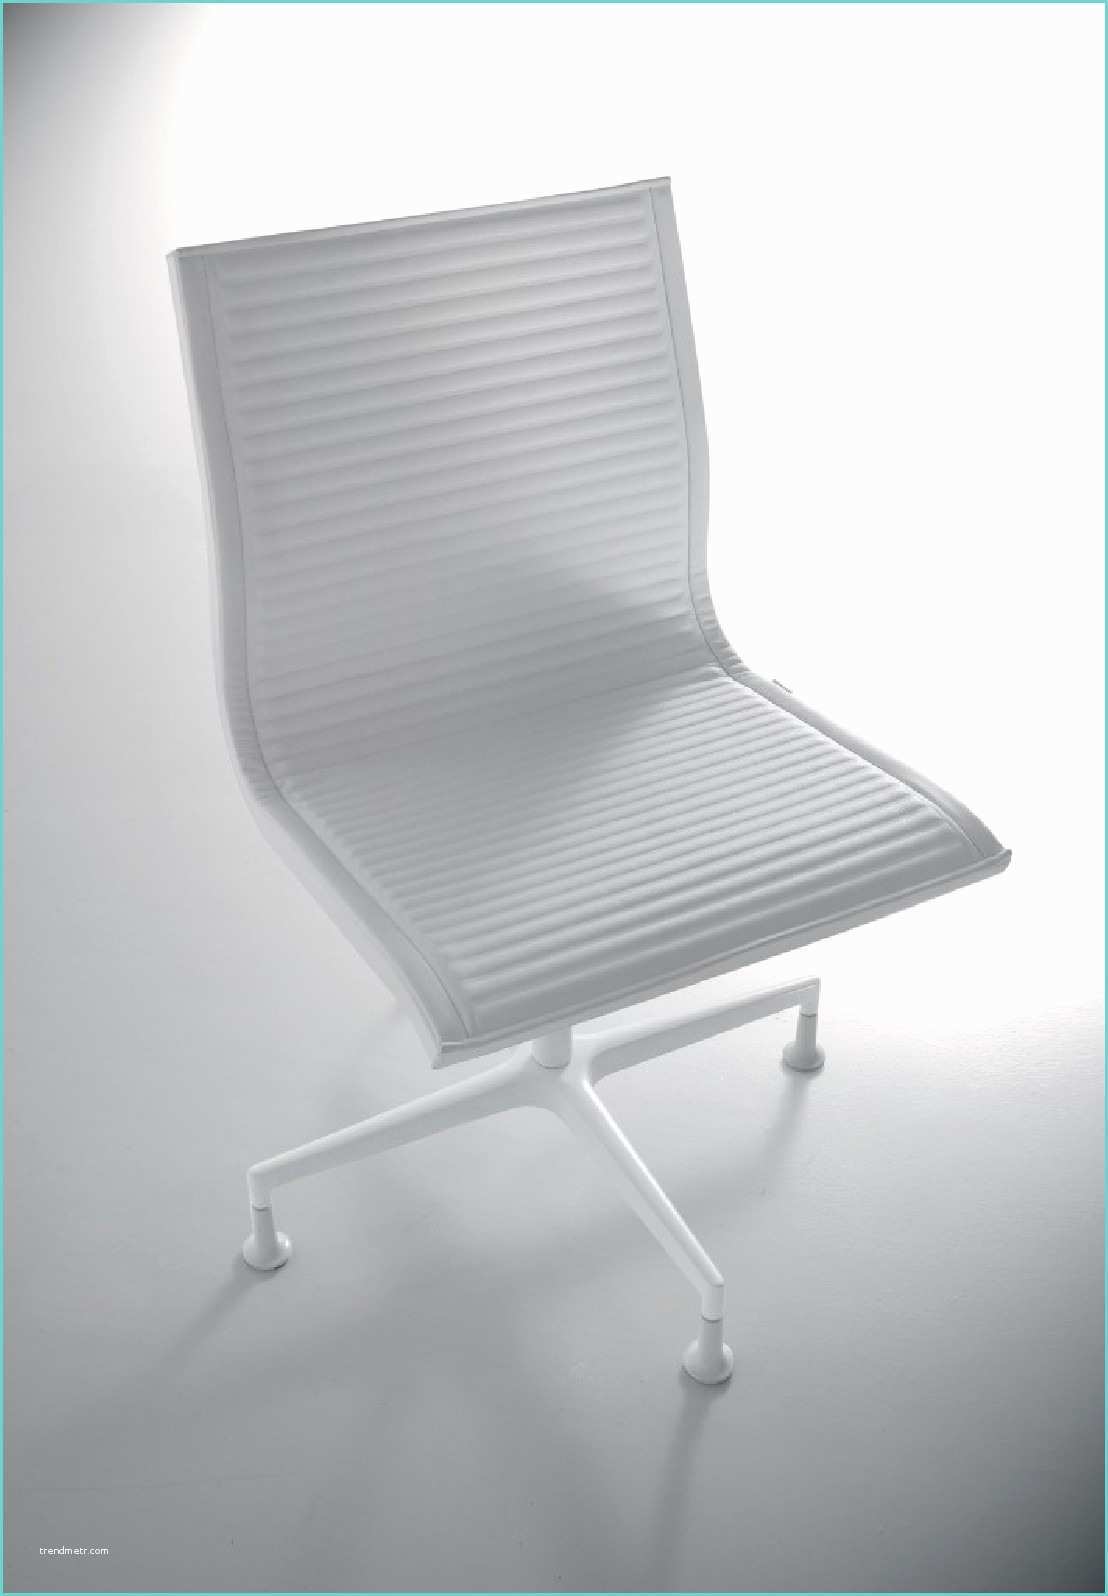 Pied Bureau Design Nulite Chaise Design En Cuir De Bureau Pied Fixe Pivotant